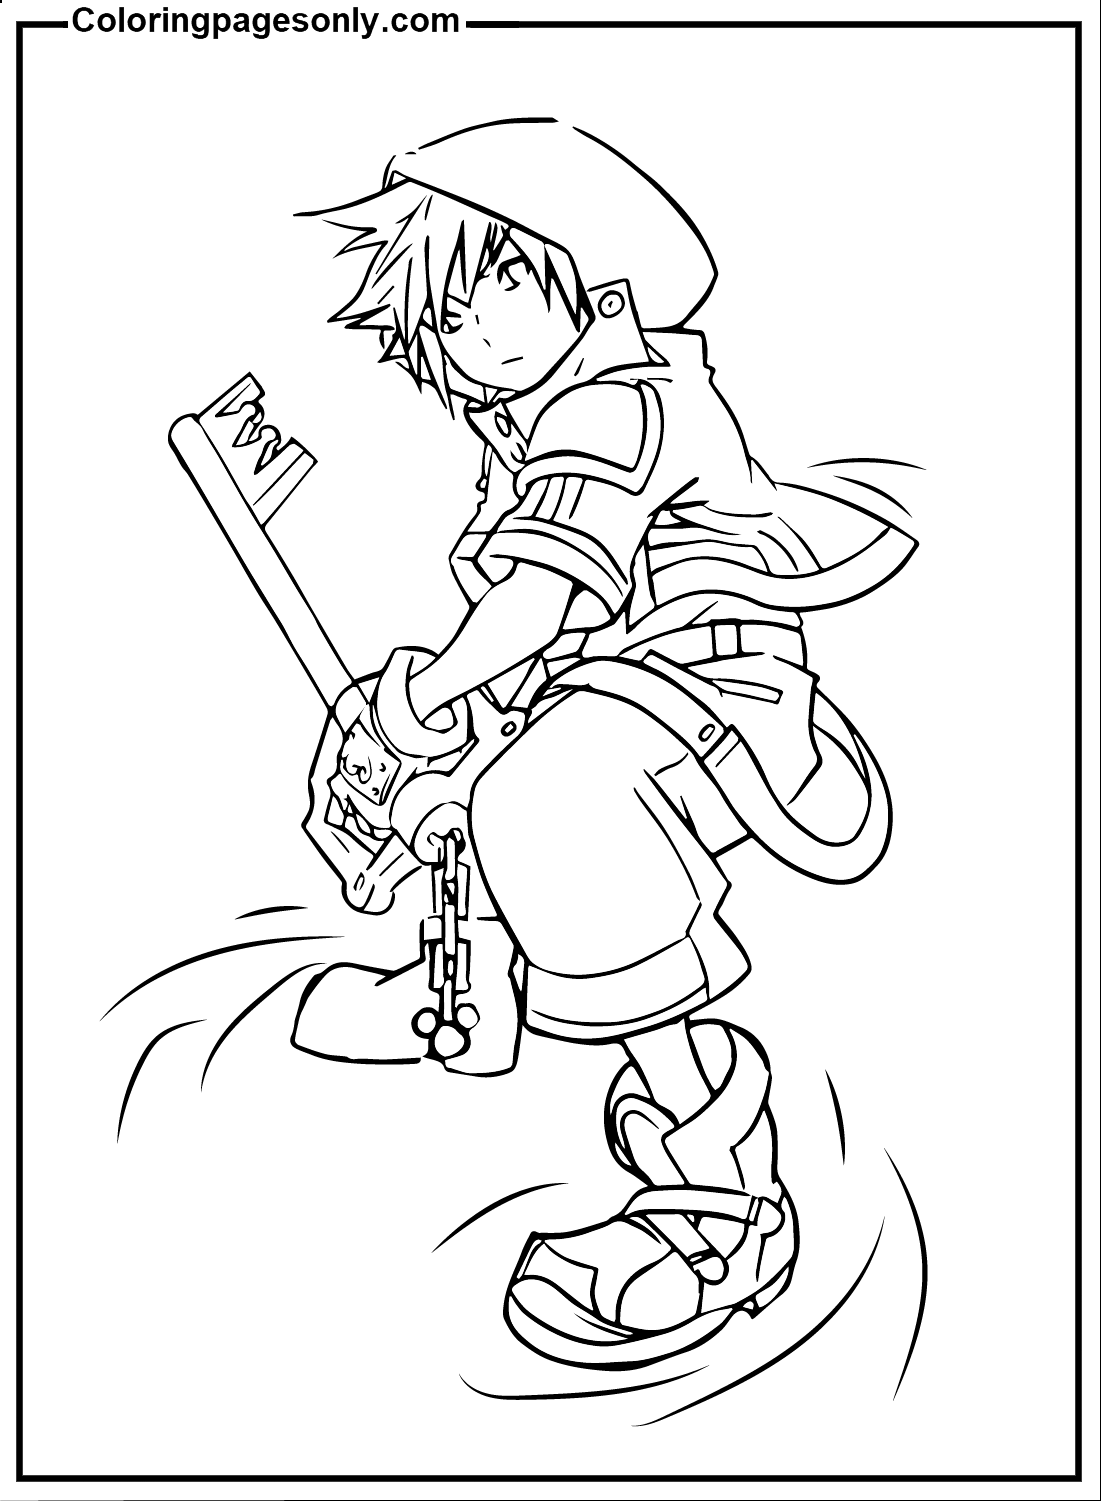 Sora Kingdom Hearts Coloring Pages